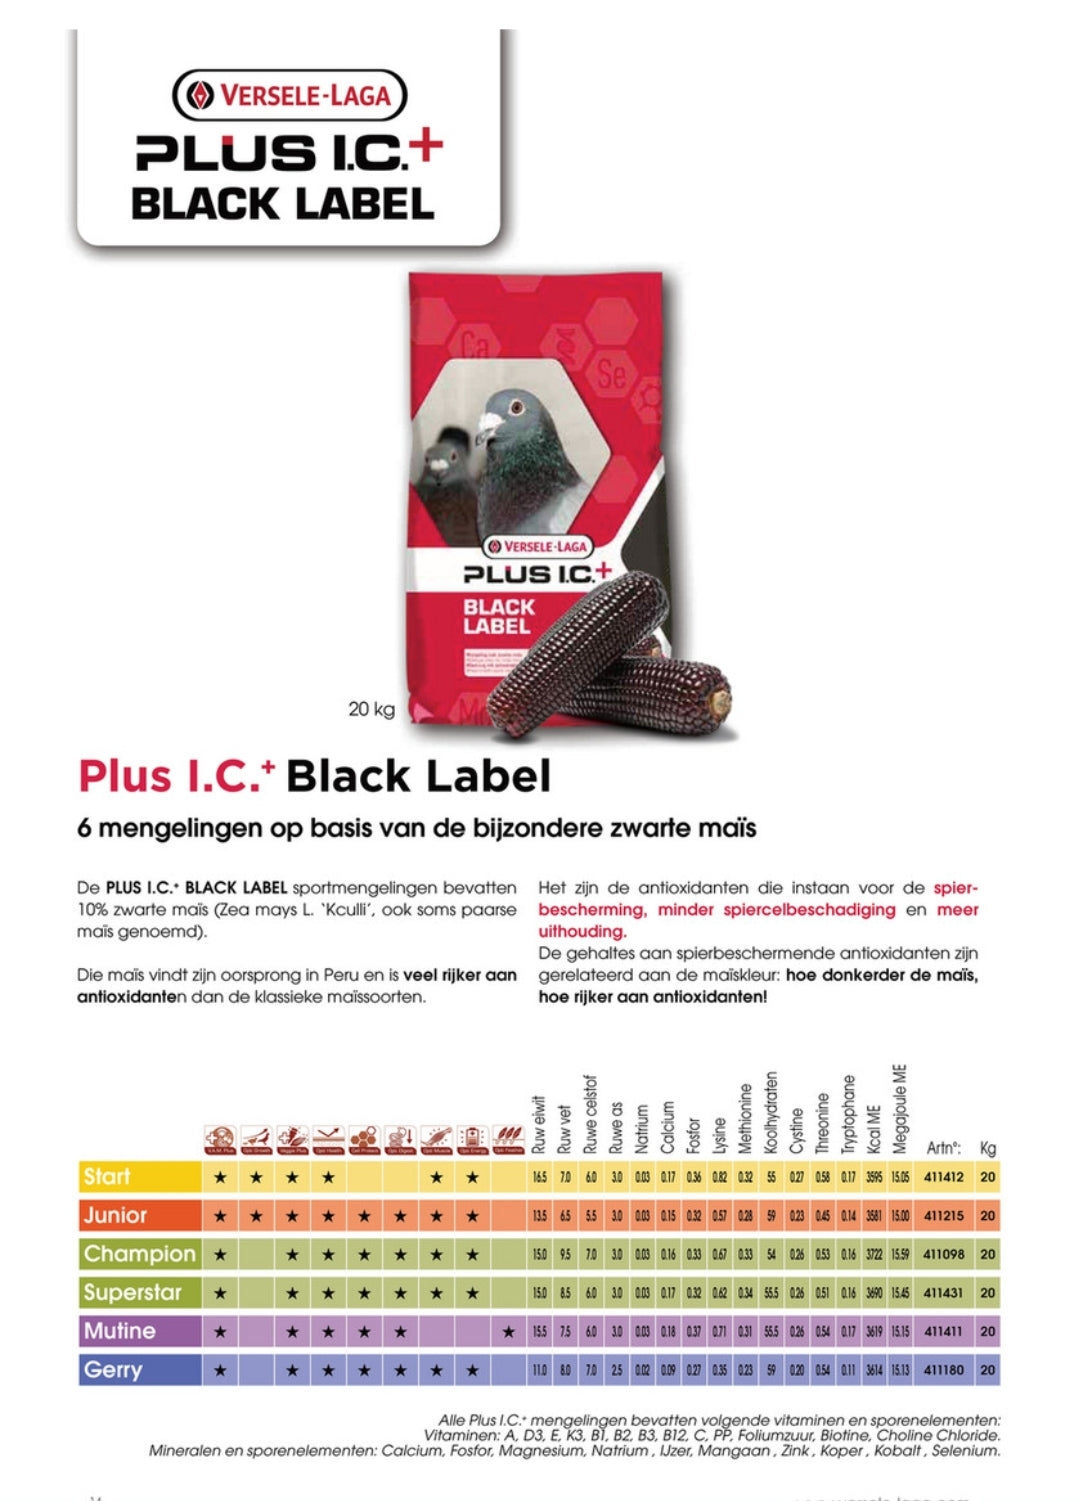 Plus I.C. + Mutine Black Label Duivenvoer 20 kg
- Versele Laga